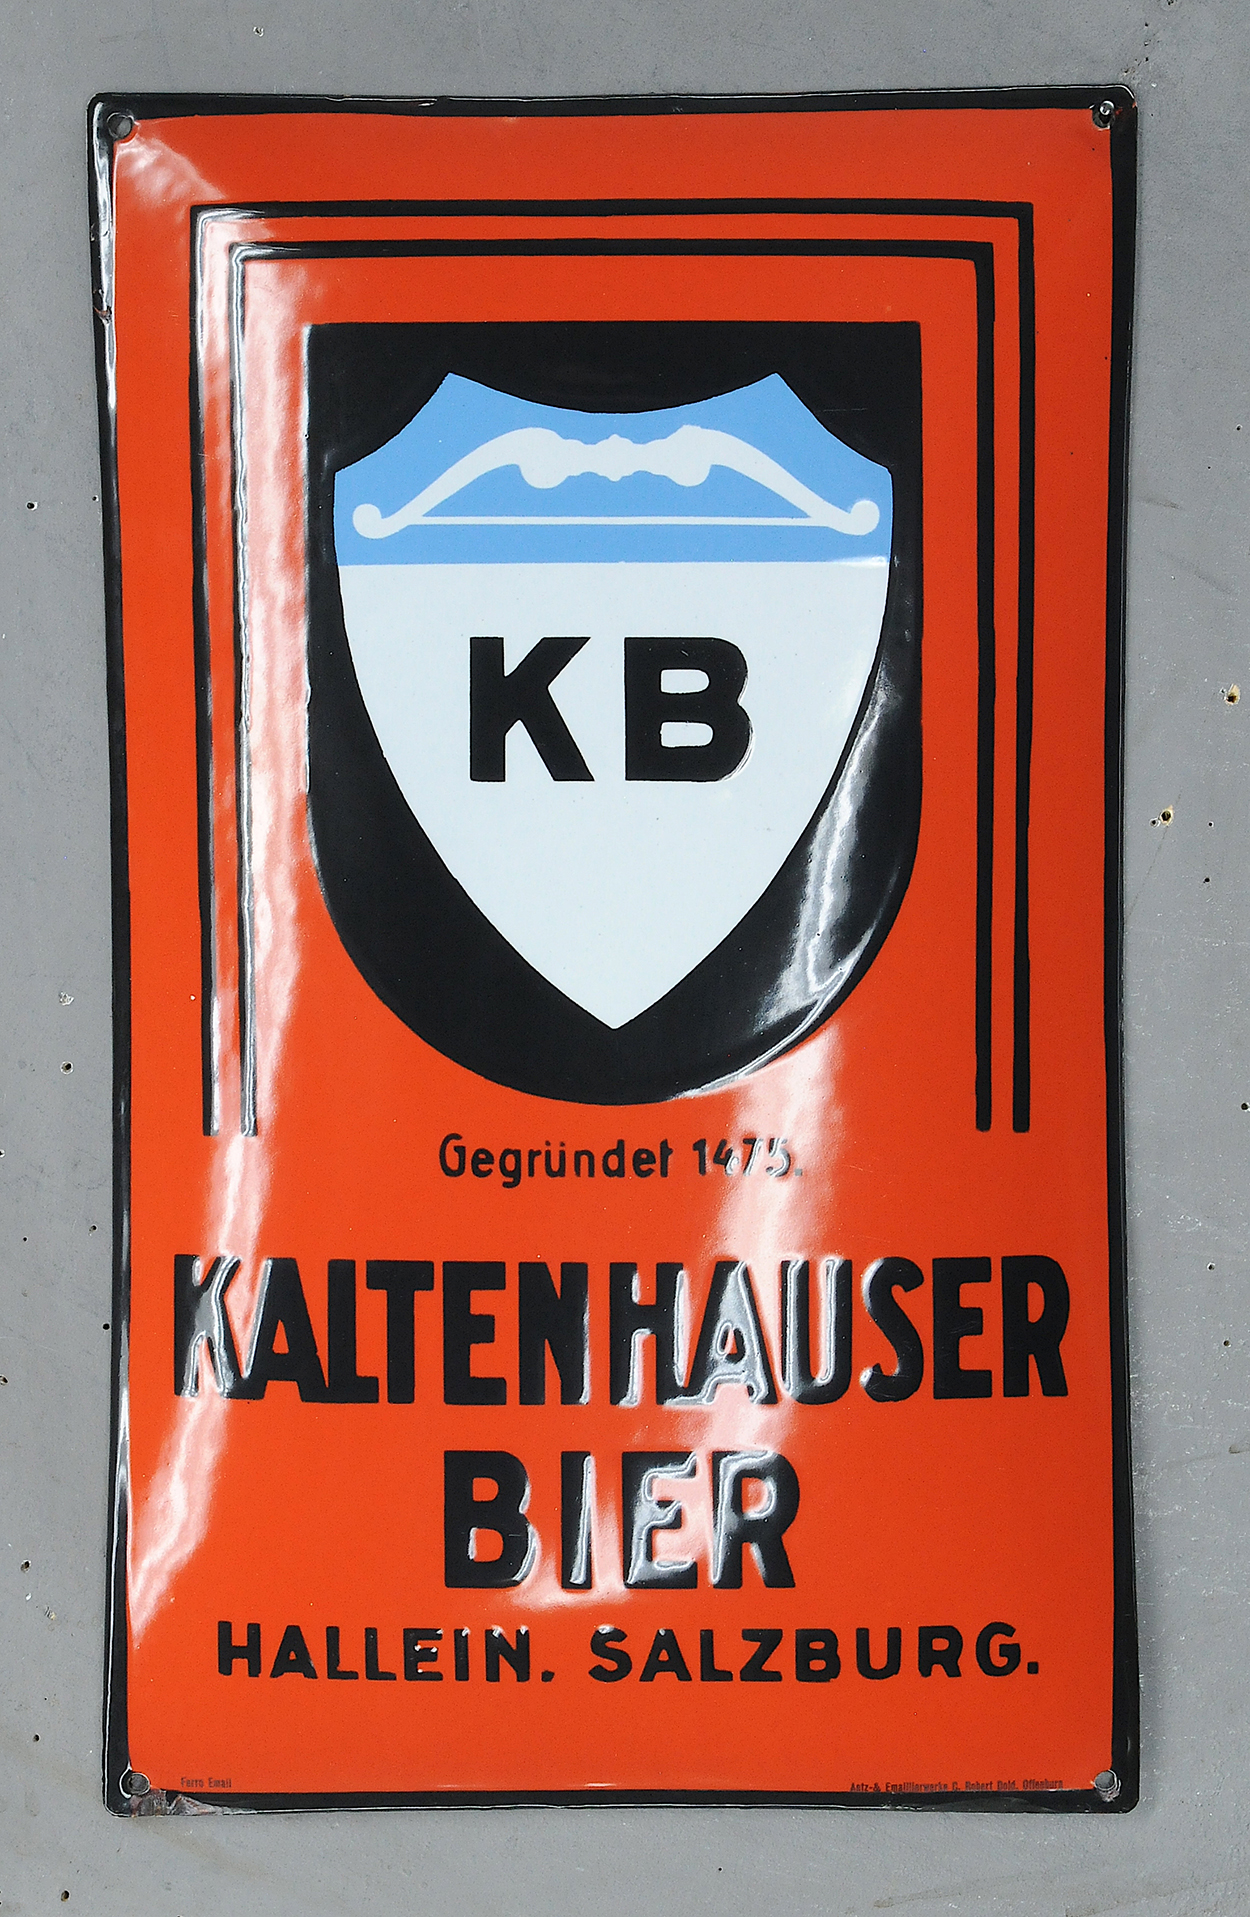 Kaltenhauser Bier - Image 3 of 3